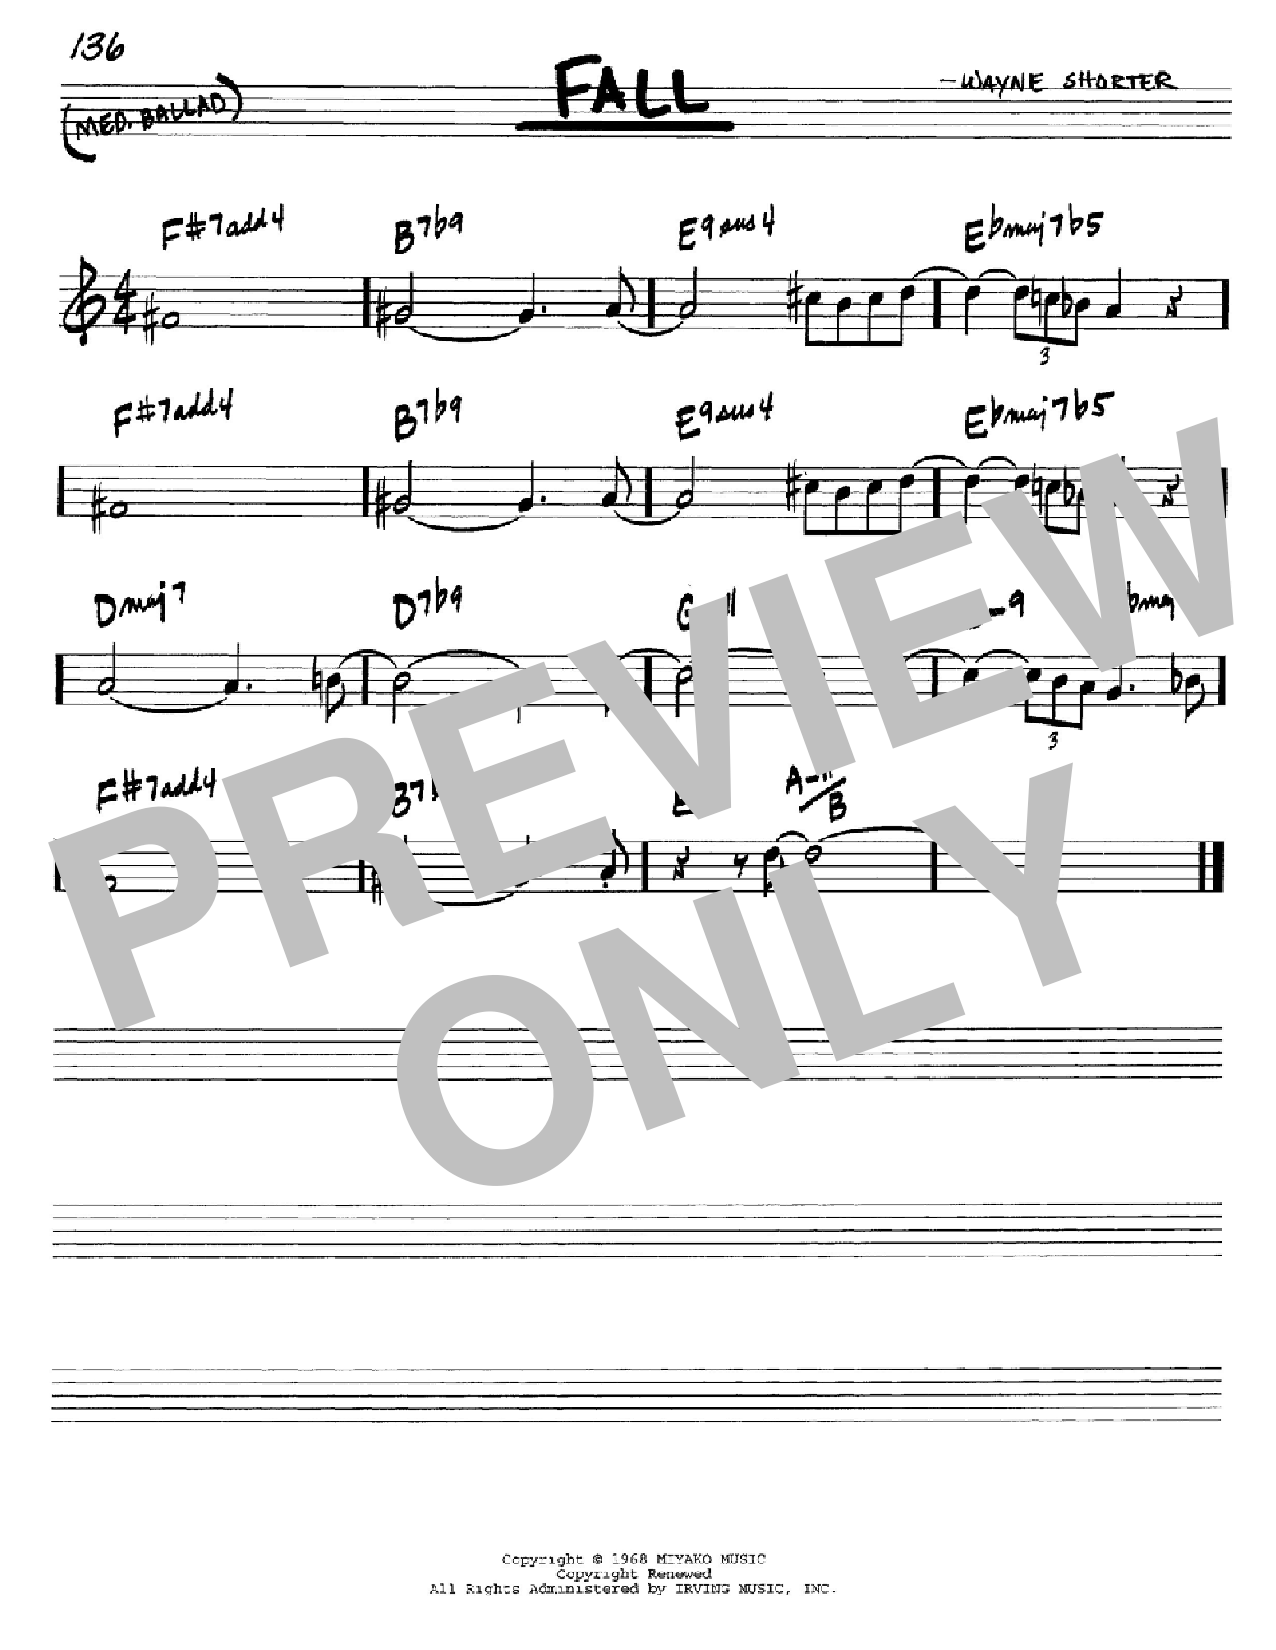 Wayne Shorter Fall Sheet Music Notes & Chords for Real Book - Melody & Chords - Bb Instruments - Download or Print PDF